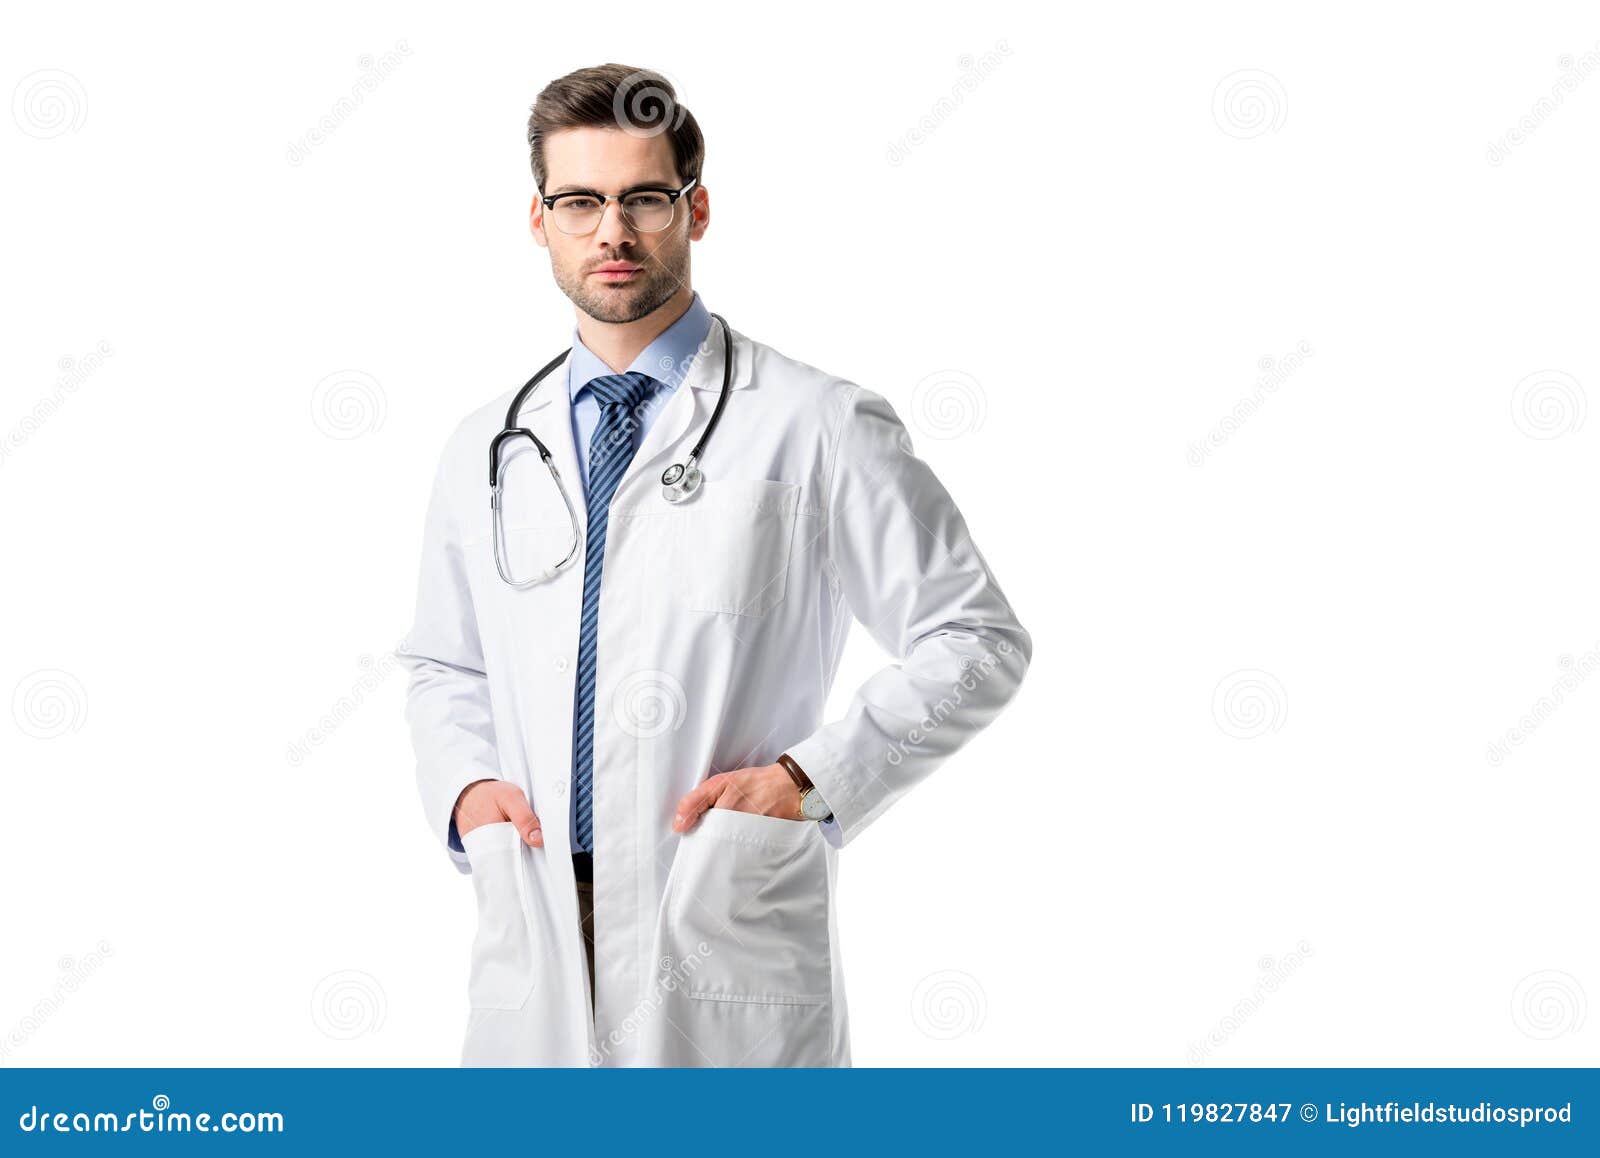 طور أصلع مزدوج why doctors wear white coat - slubzagranica.org